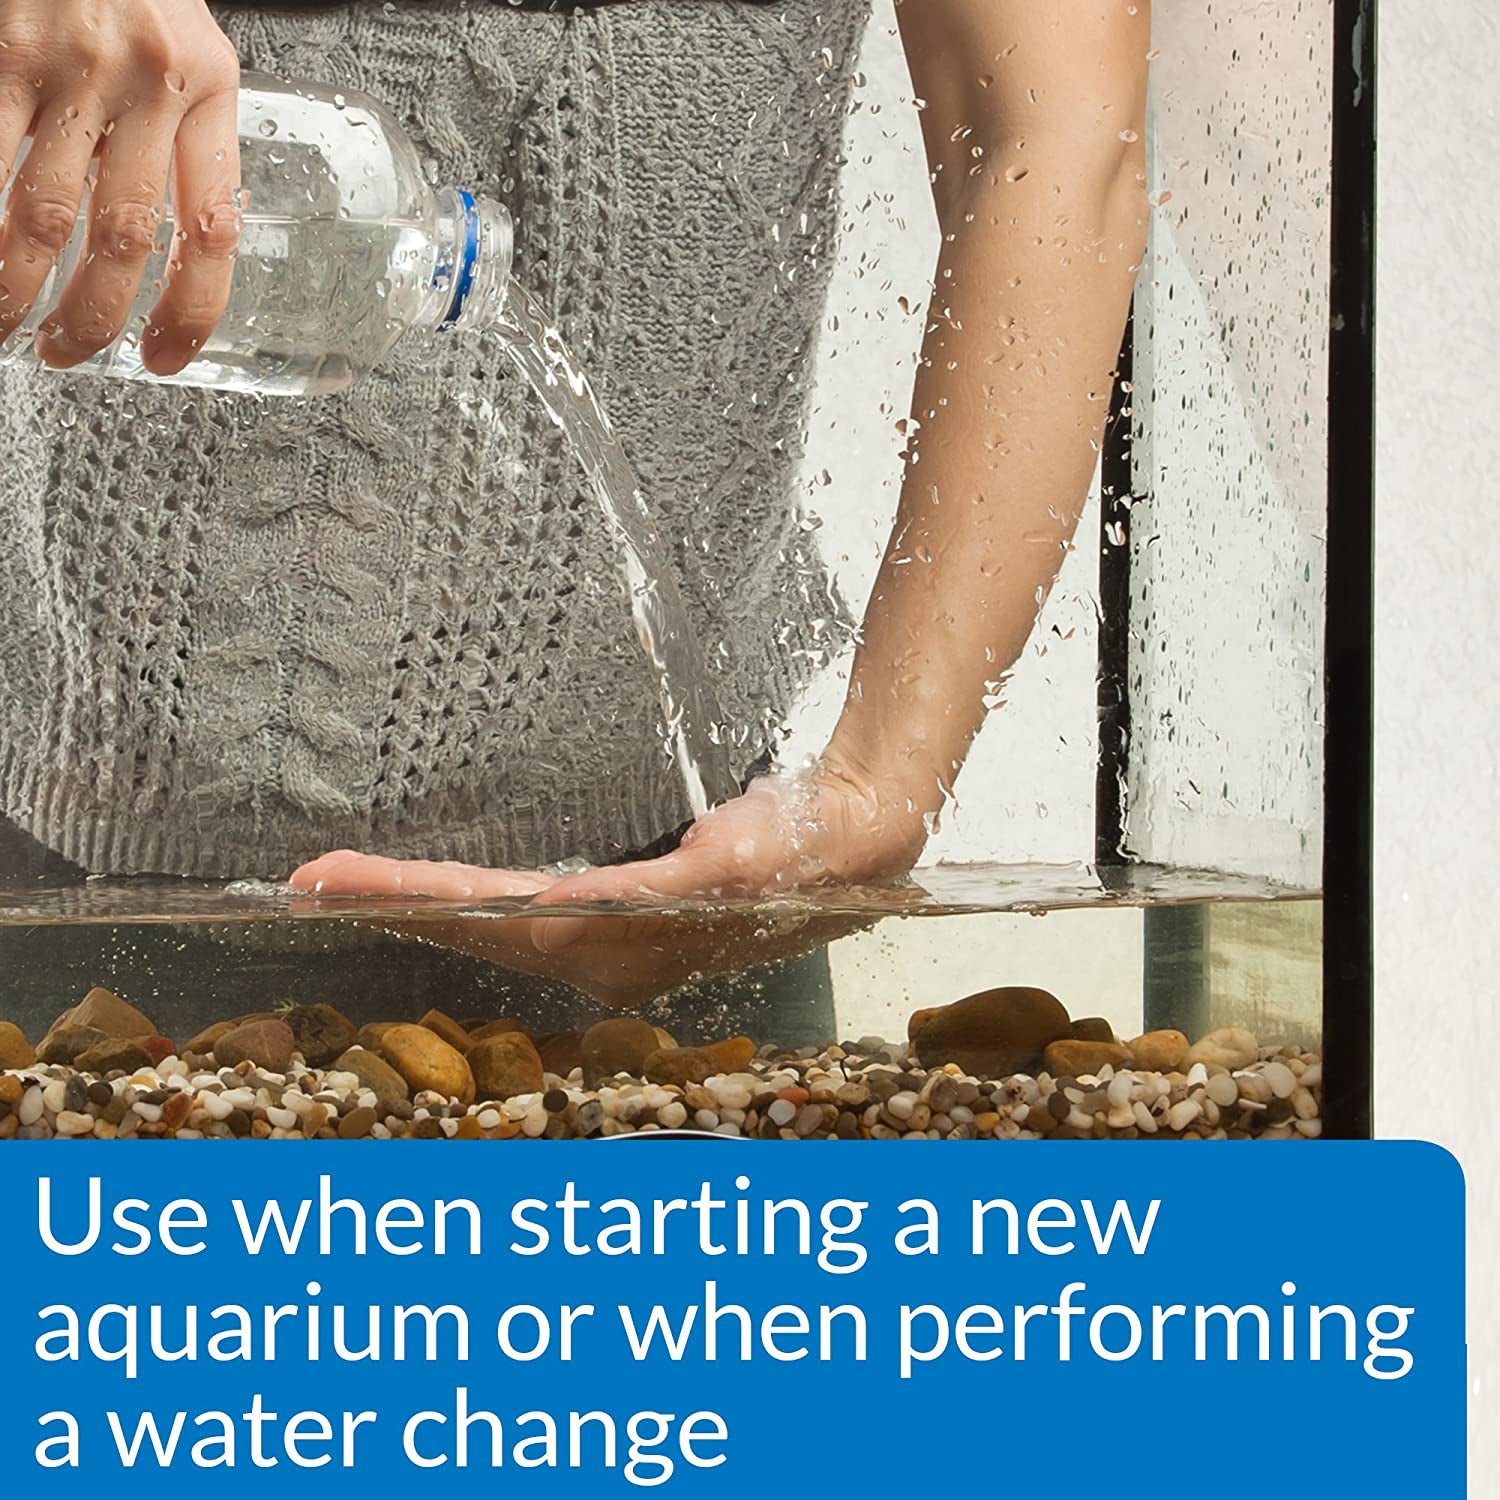 API AQUARIUM SALT Freshwater Aquarium Salt 65-Ounce Box